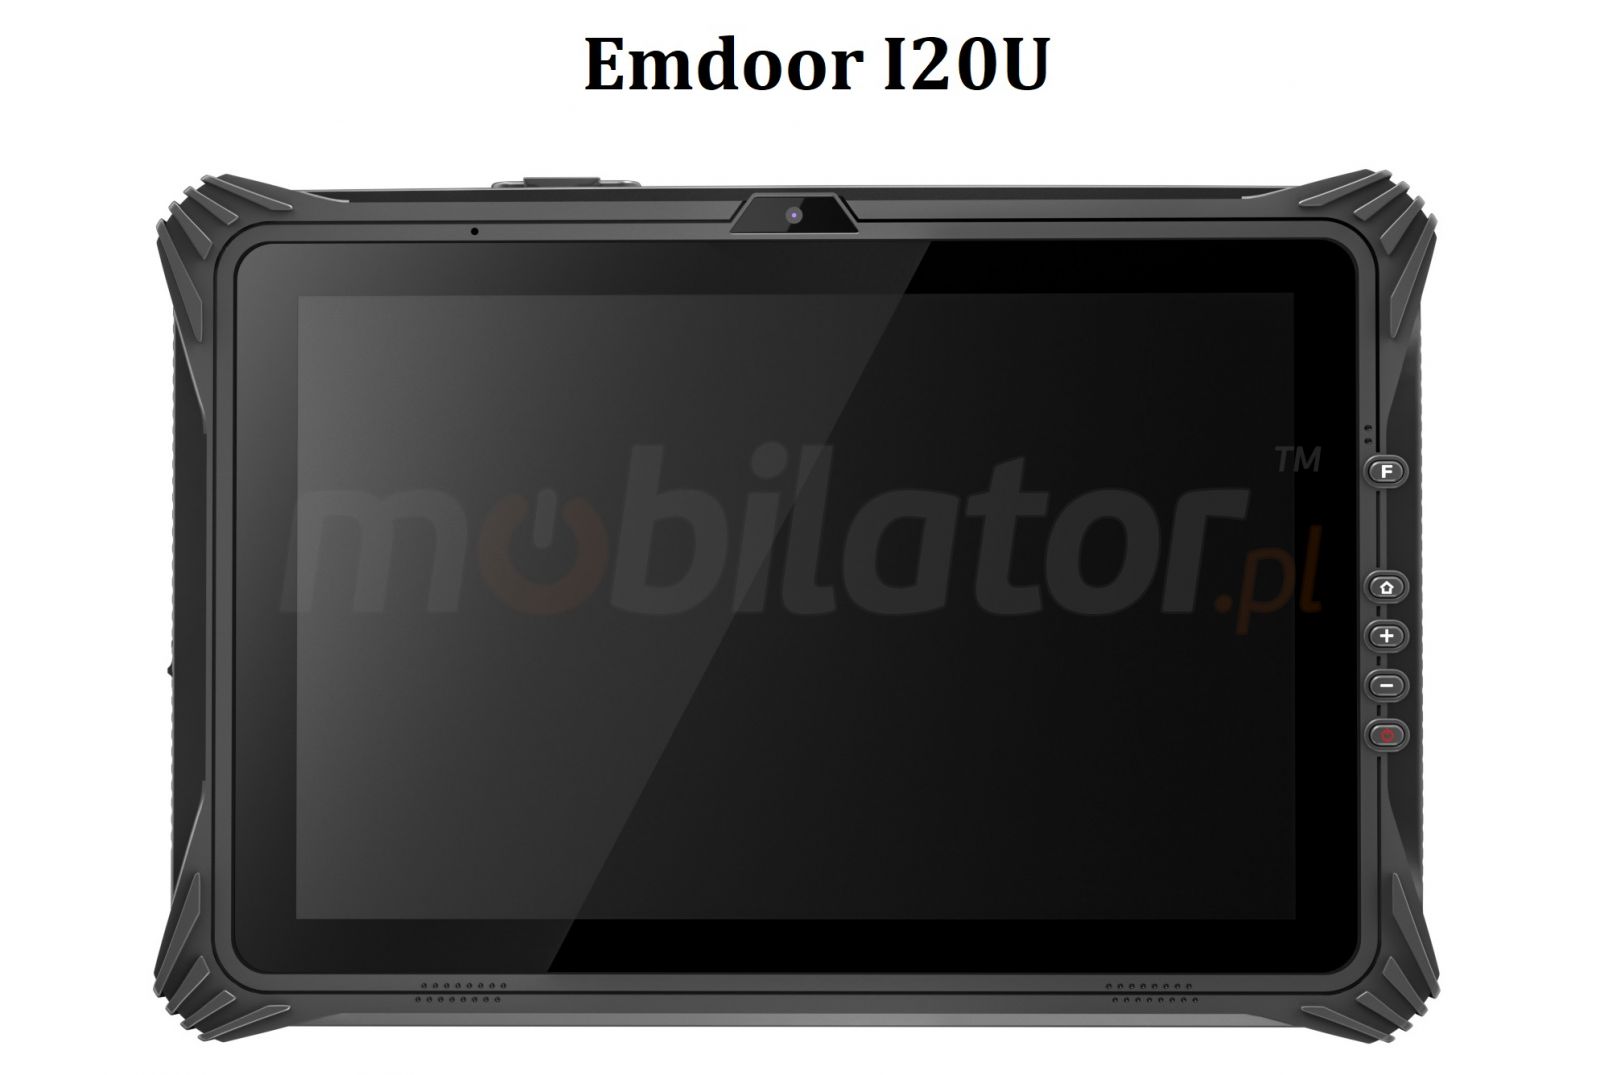 Emdoor I20U v.16 - Rugged industrial 12.2 inch tablet with Windows 10 PRO, NFC, 4G, 8GB RAM and 128GB ROM, IP65 + MIL-STD-810G, Bluetooth 4.2 